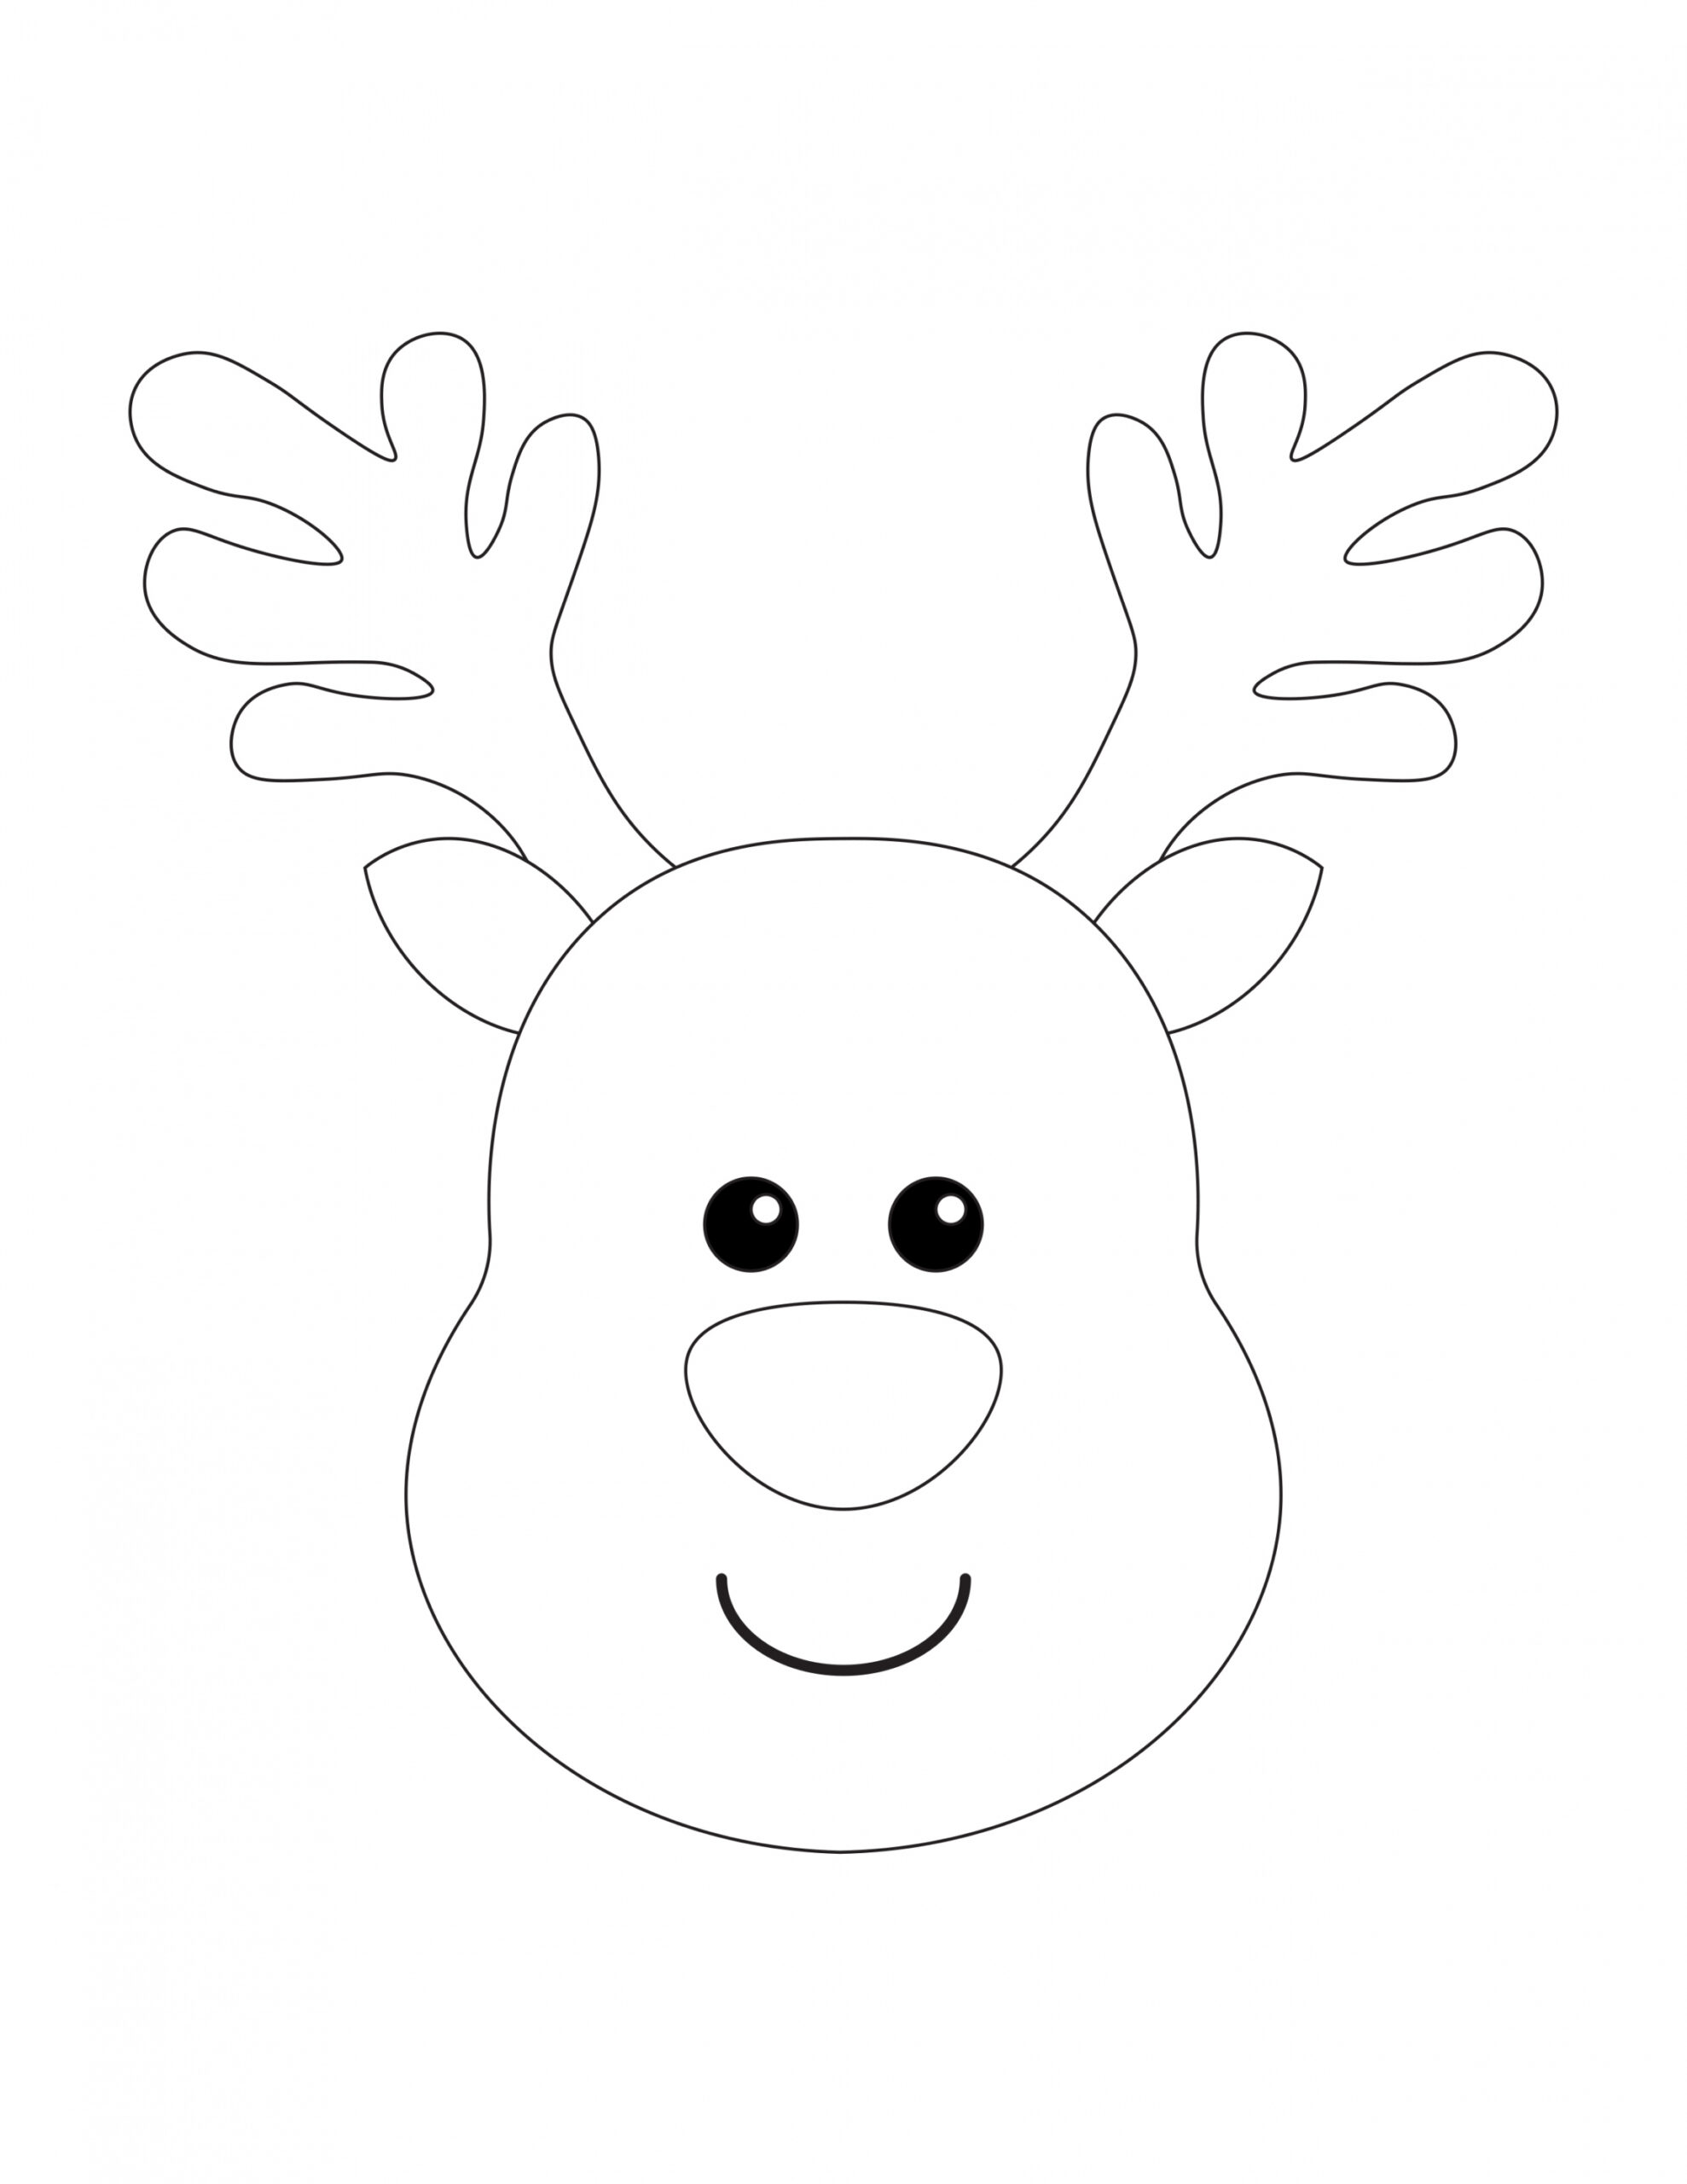 Free Printable Reindeer Templates - Daily Printables - FREE Printables - Cut Out Reindeer Template Printable